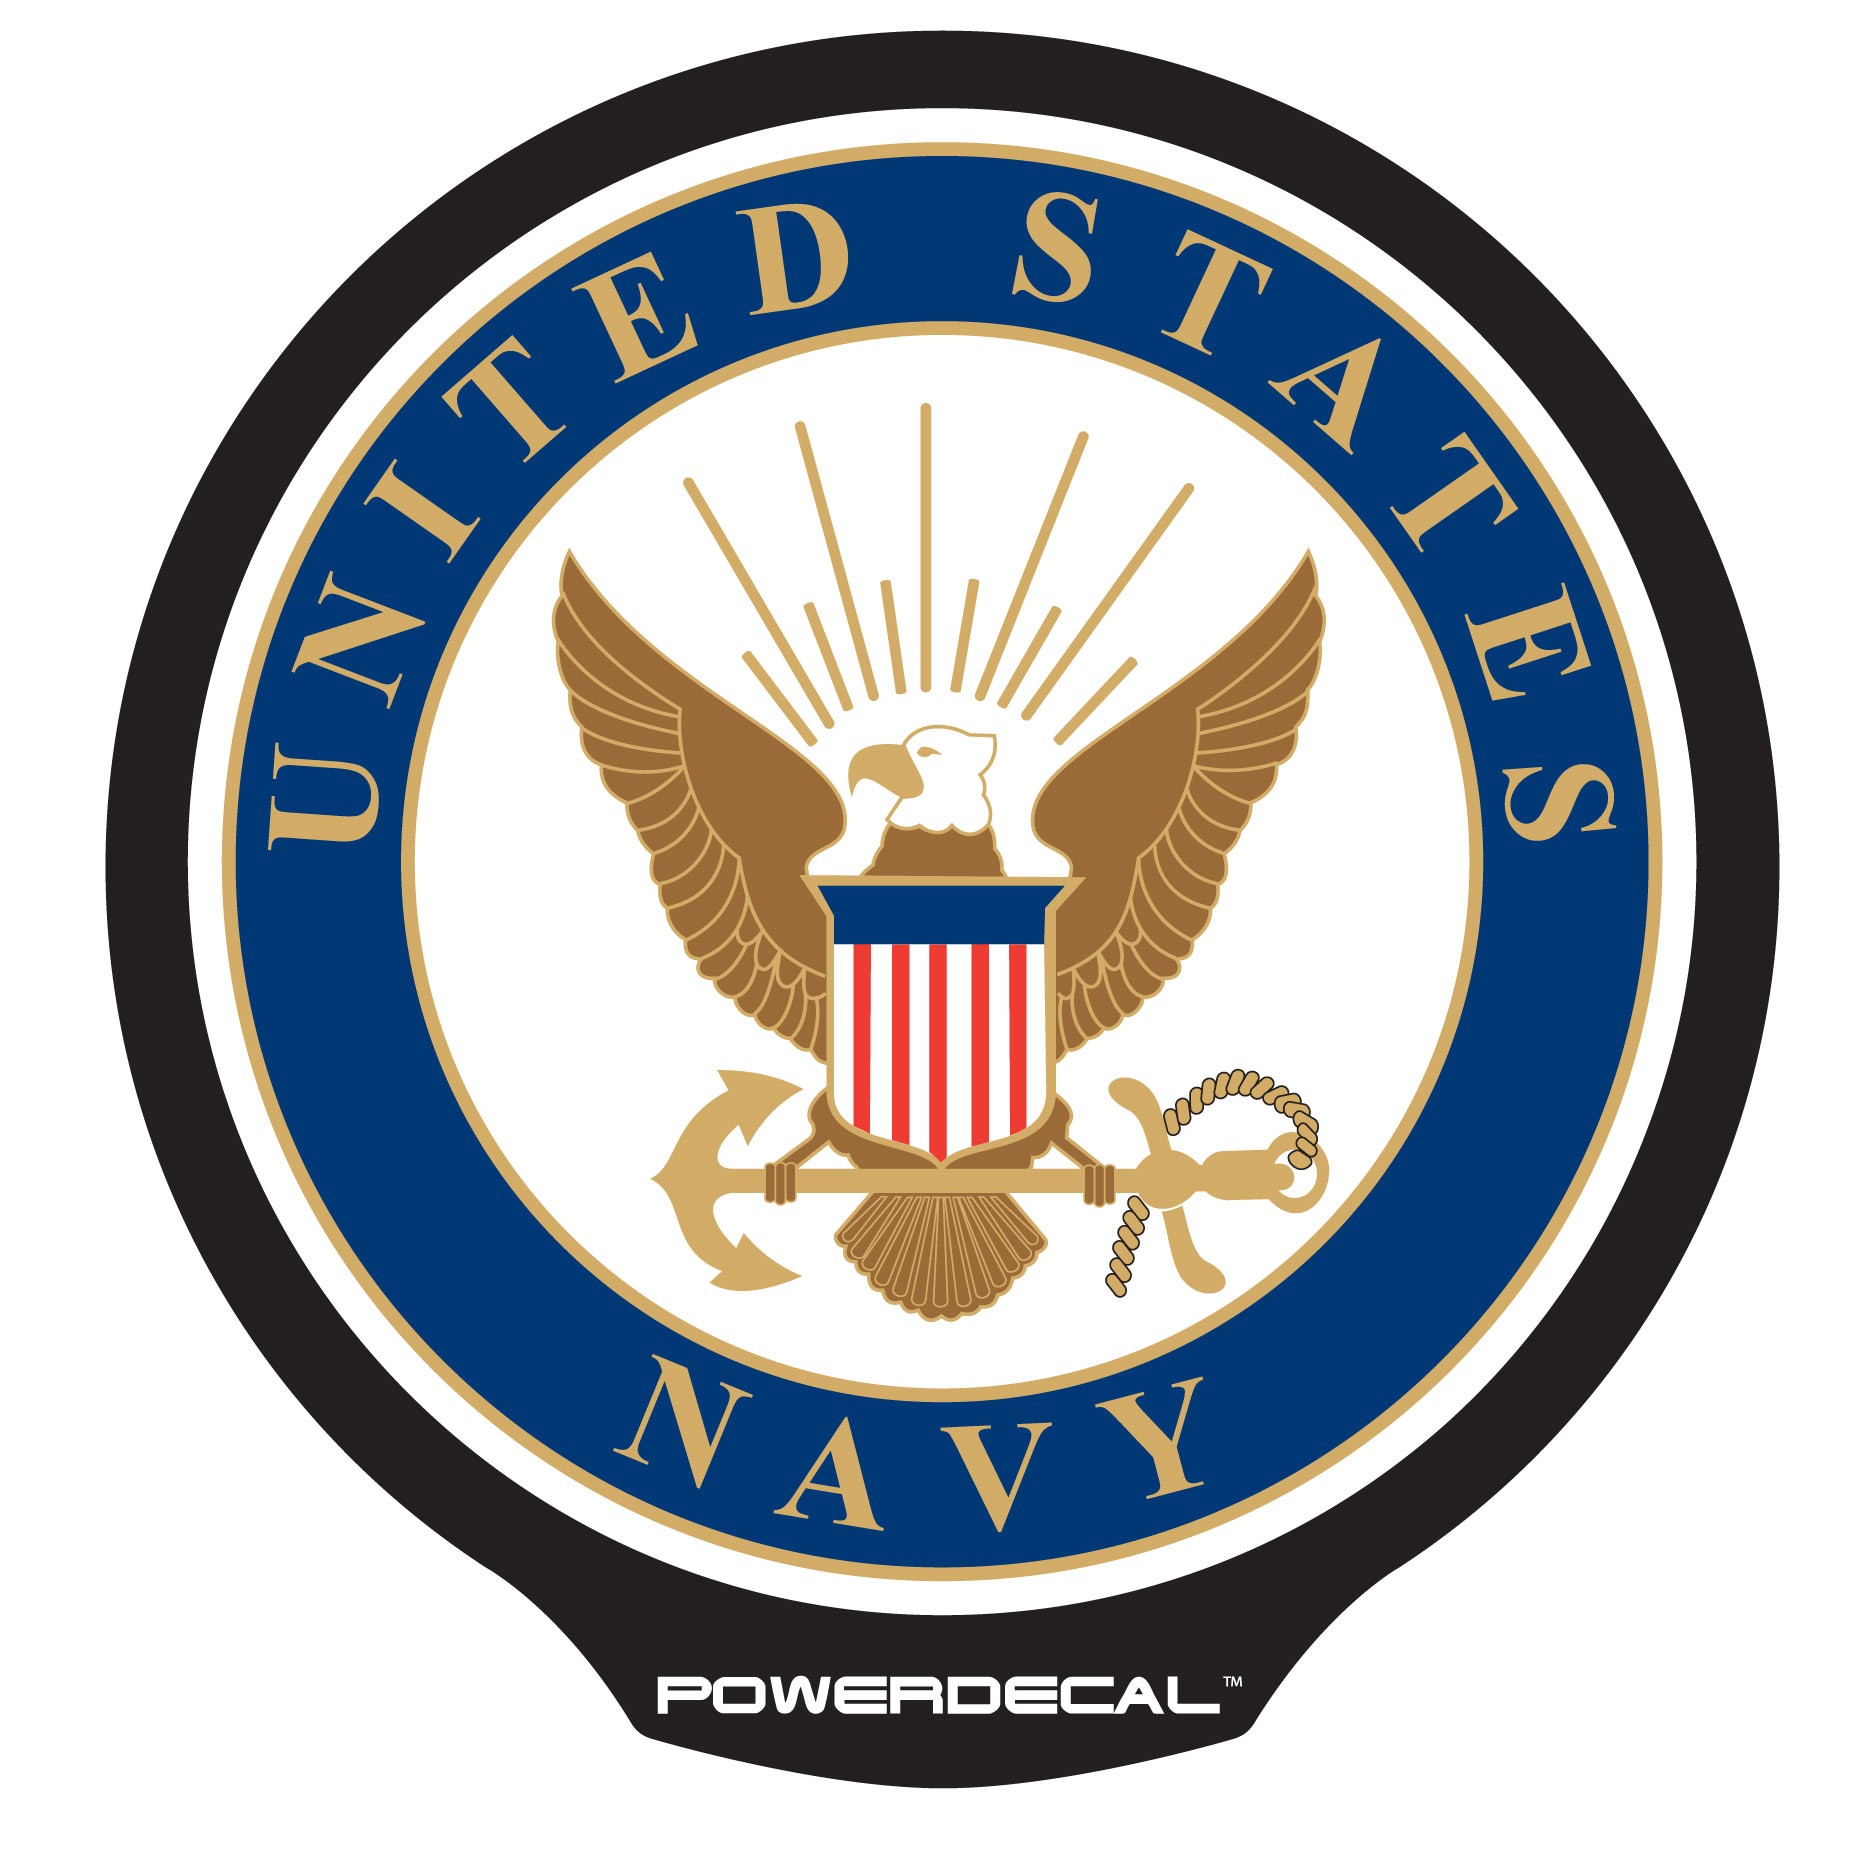 United States Navy Symbol Clipart